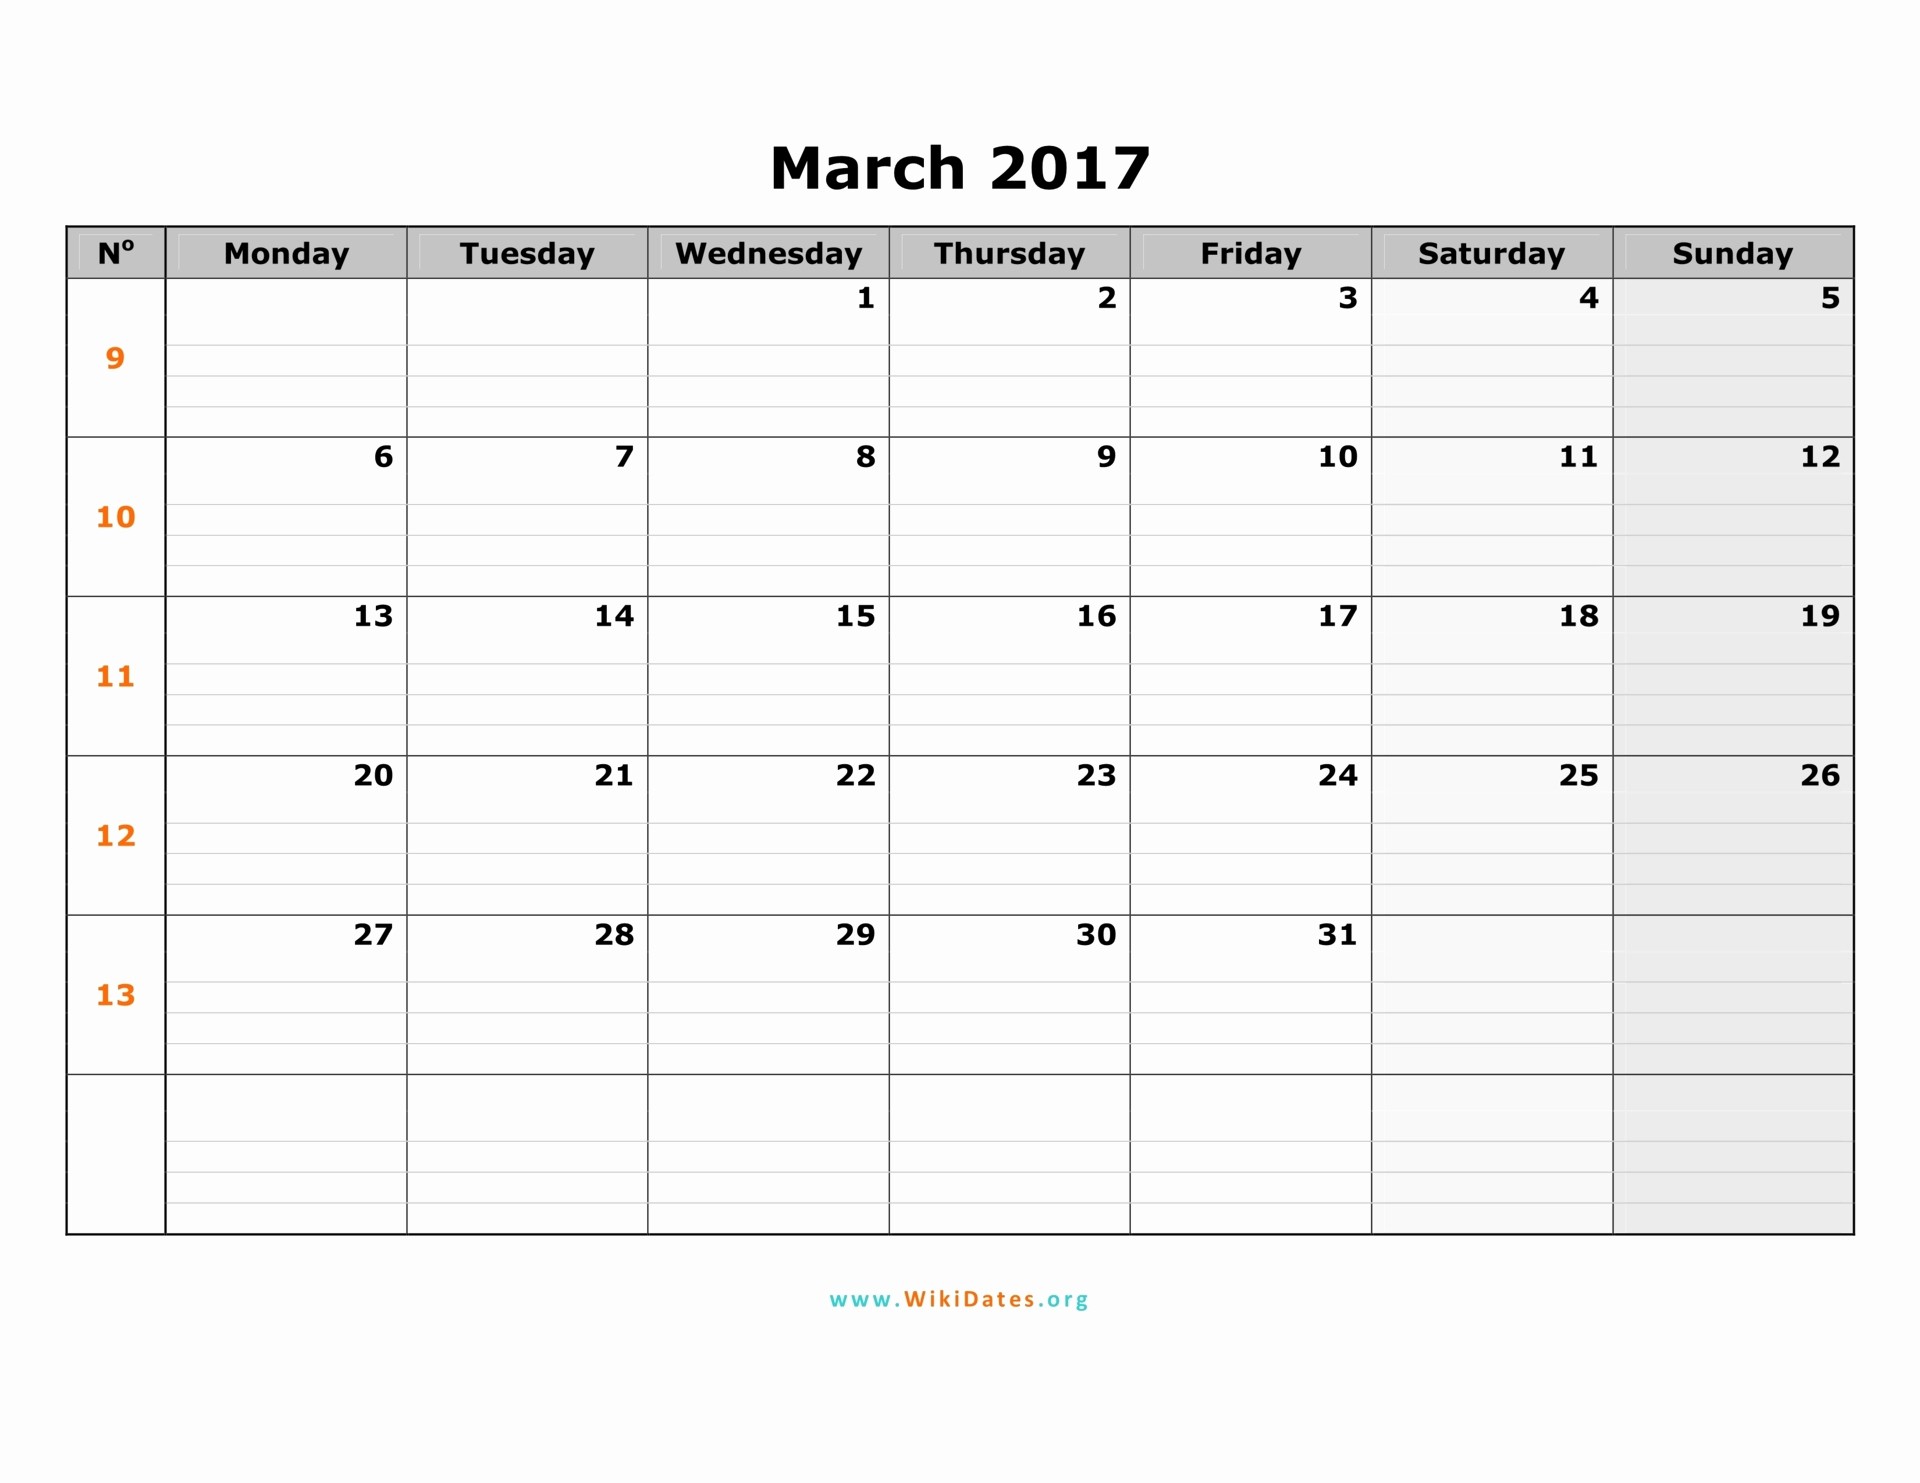 Monday to Sunday Calendar 2017 Inspirational March 2017 Calendar